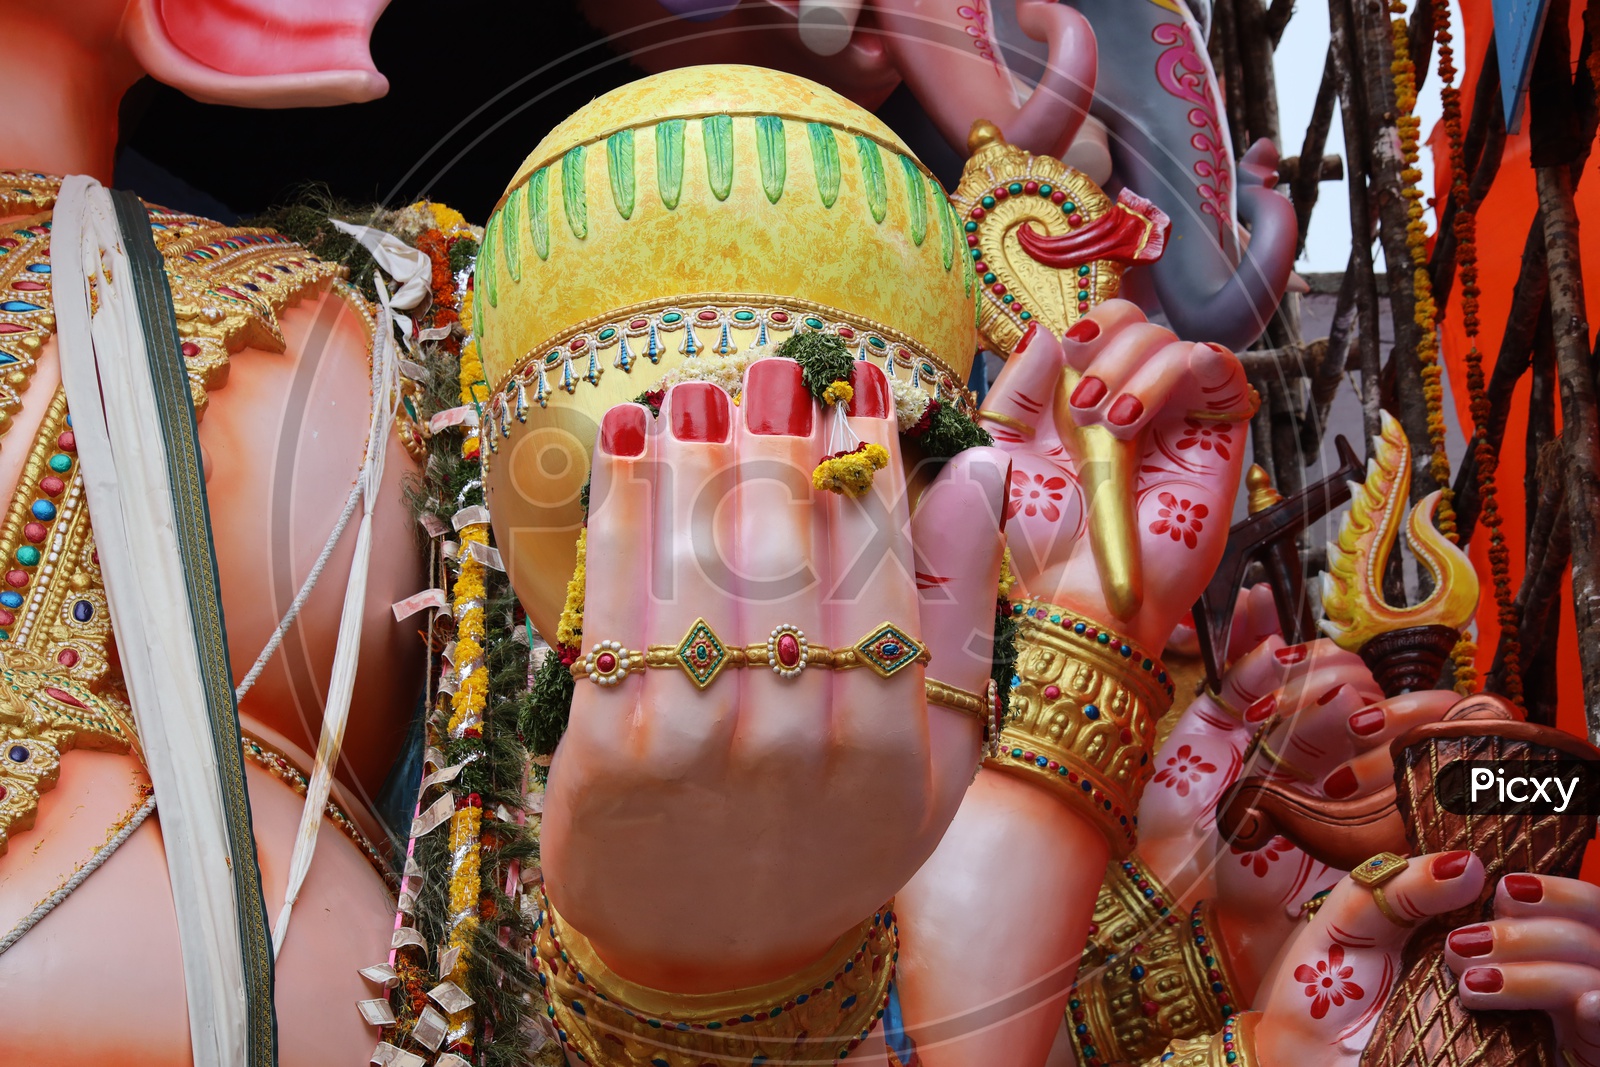 Sri Dwadashaditya Maha Ganapathi Idol In Khairatabad For Ganesh Chathurdhi Festival 2019 Closeup View